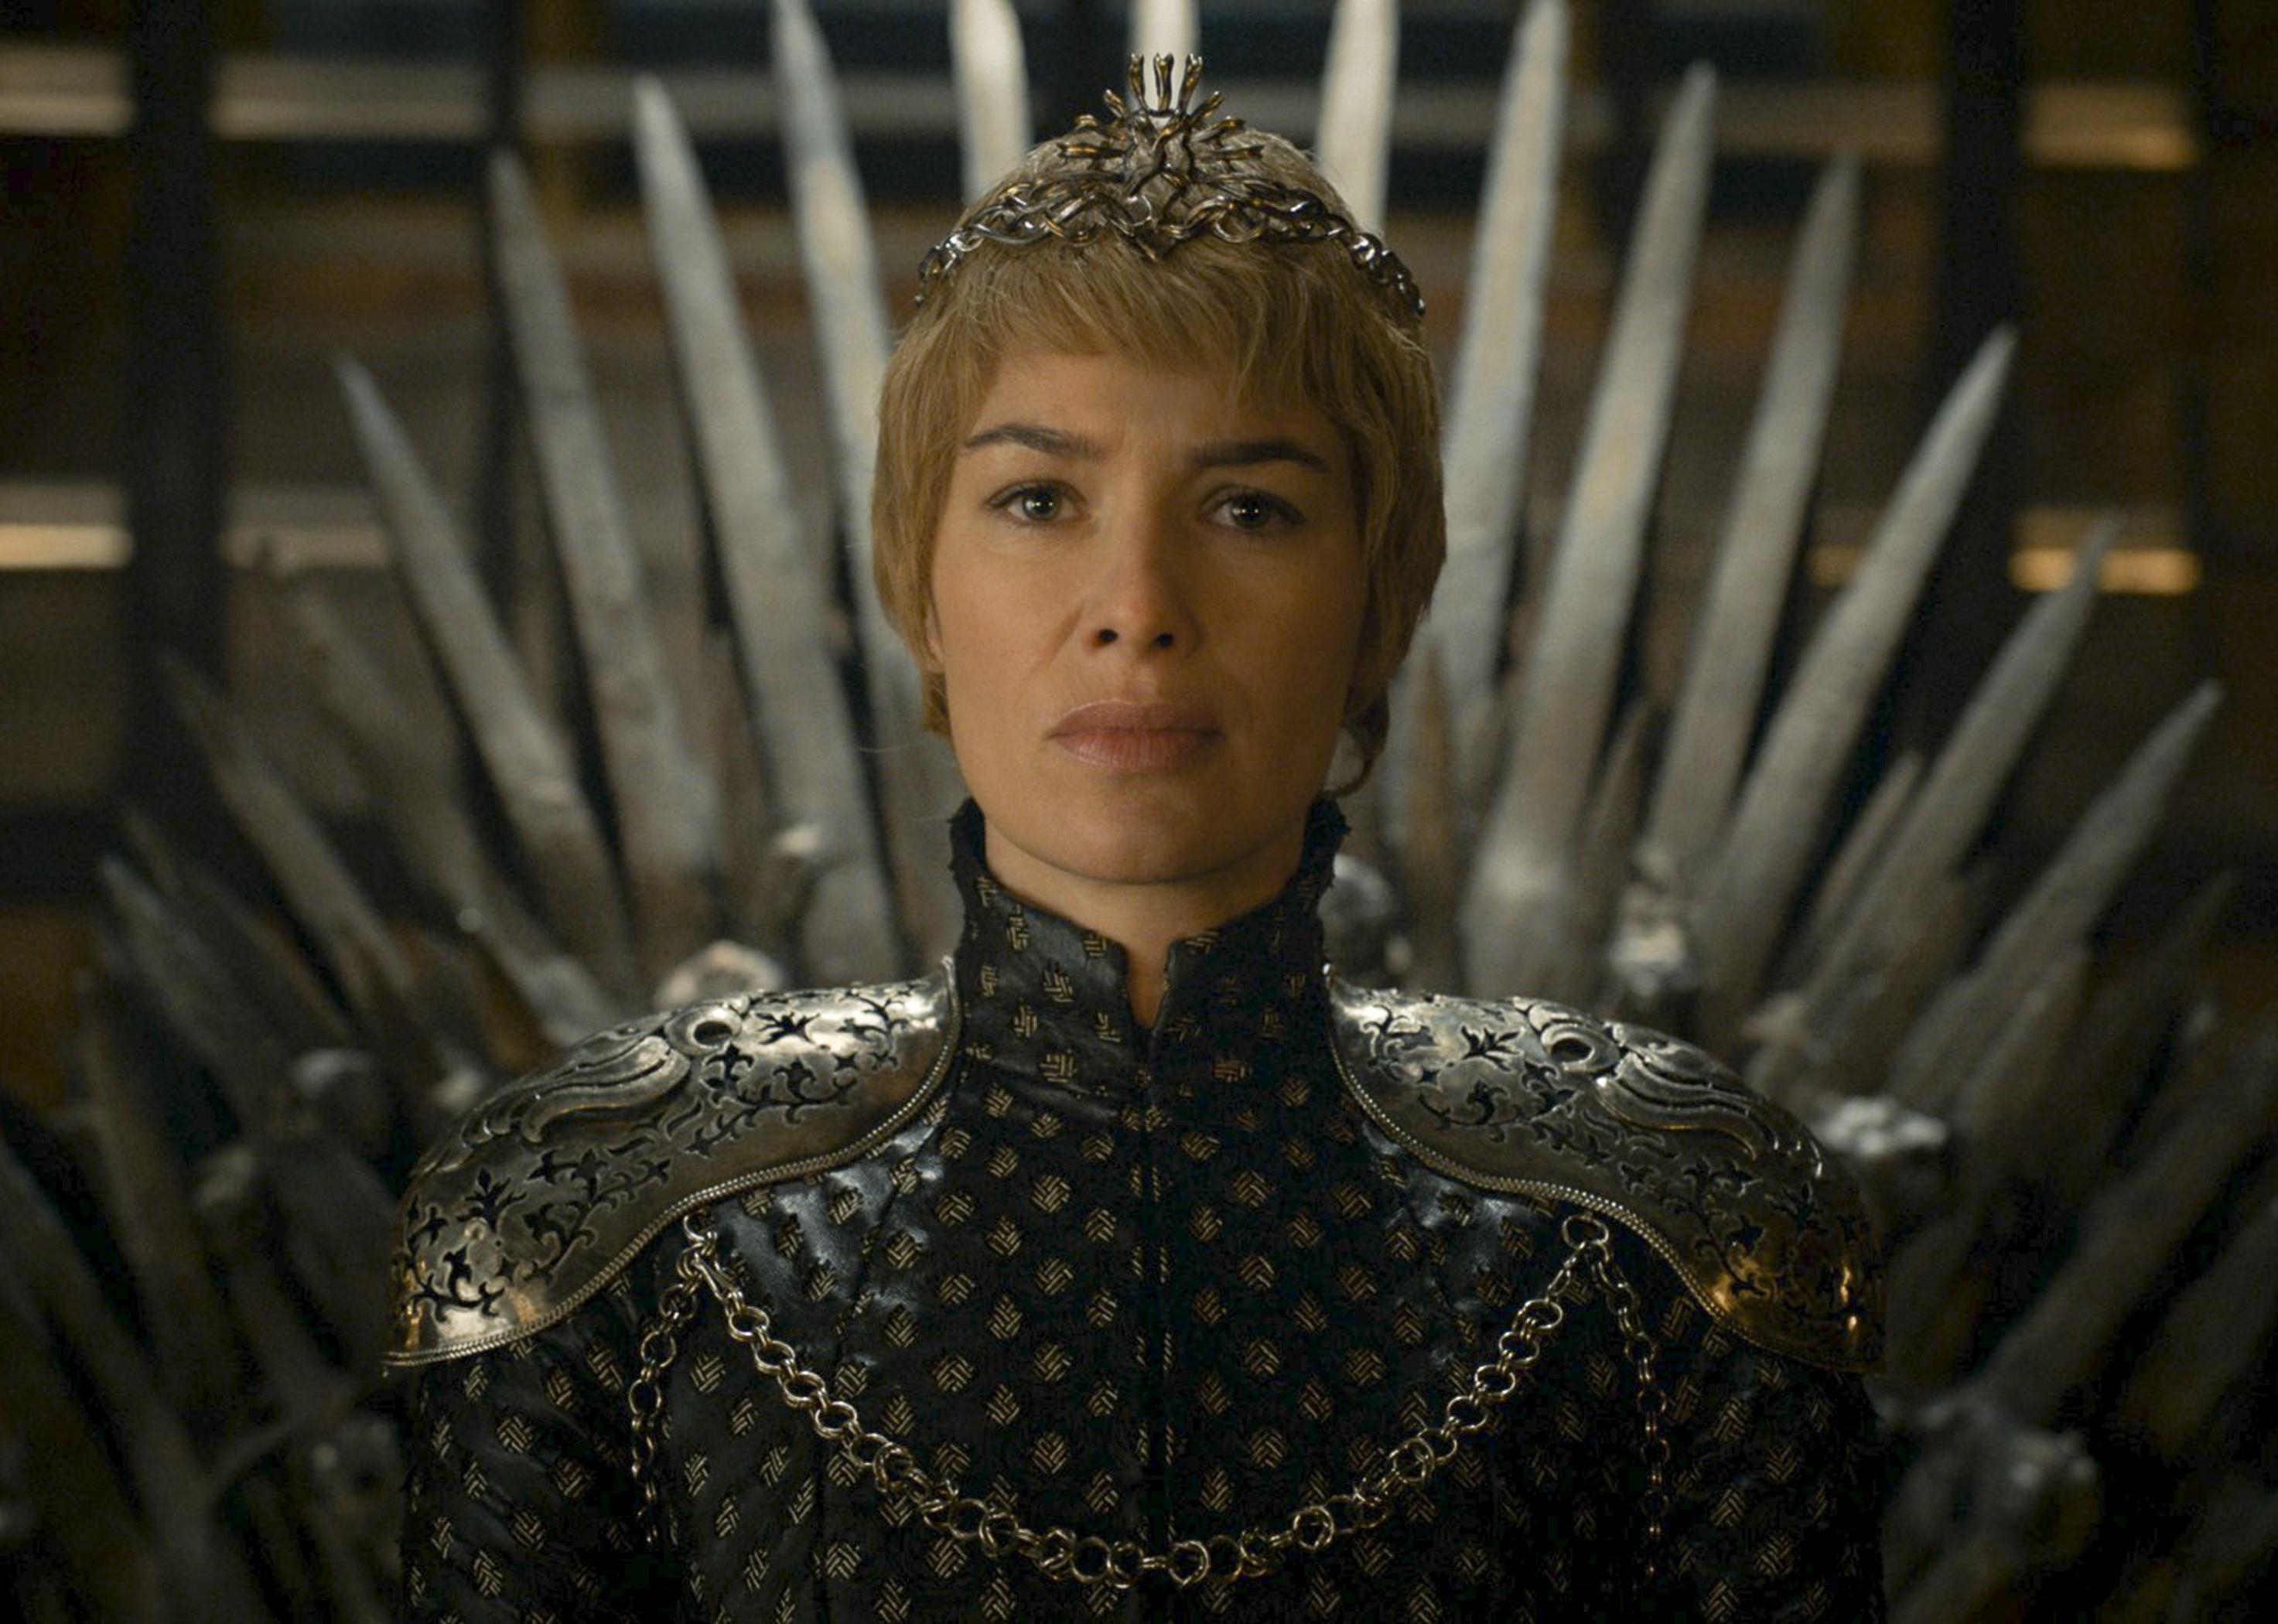 Lena Headey, with short hair, in armor and a crown on a throne.